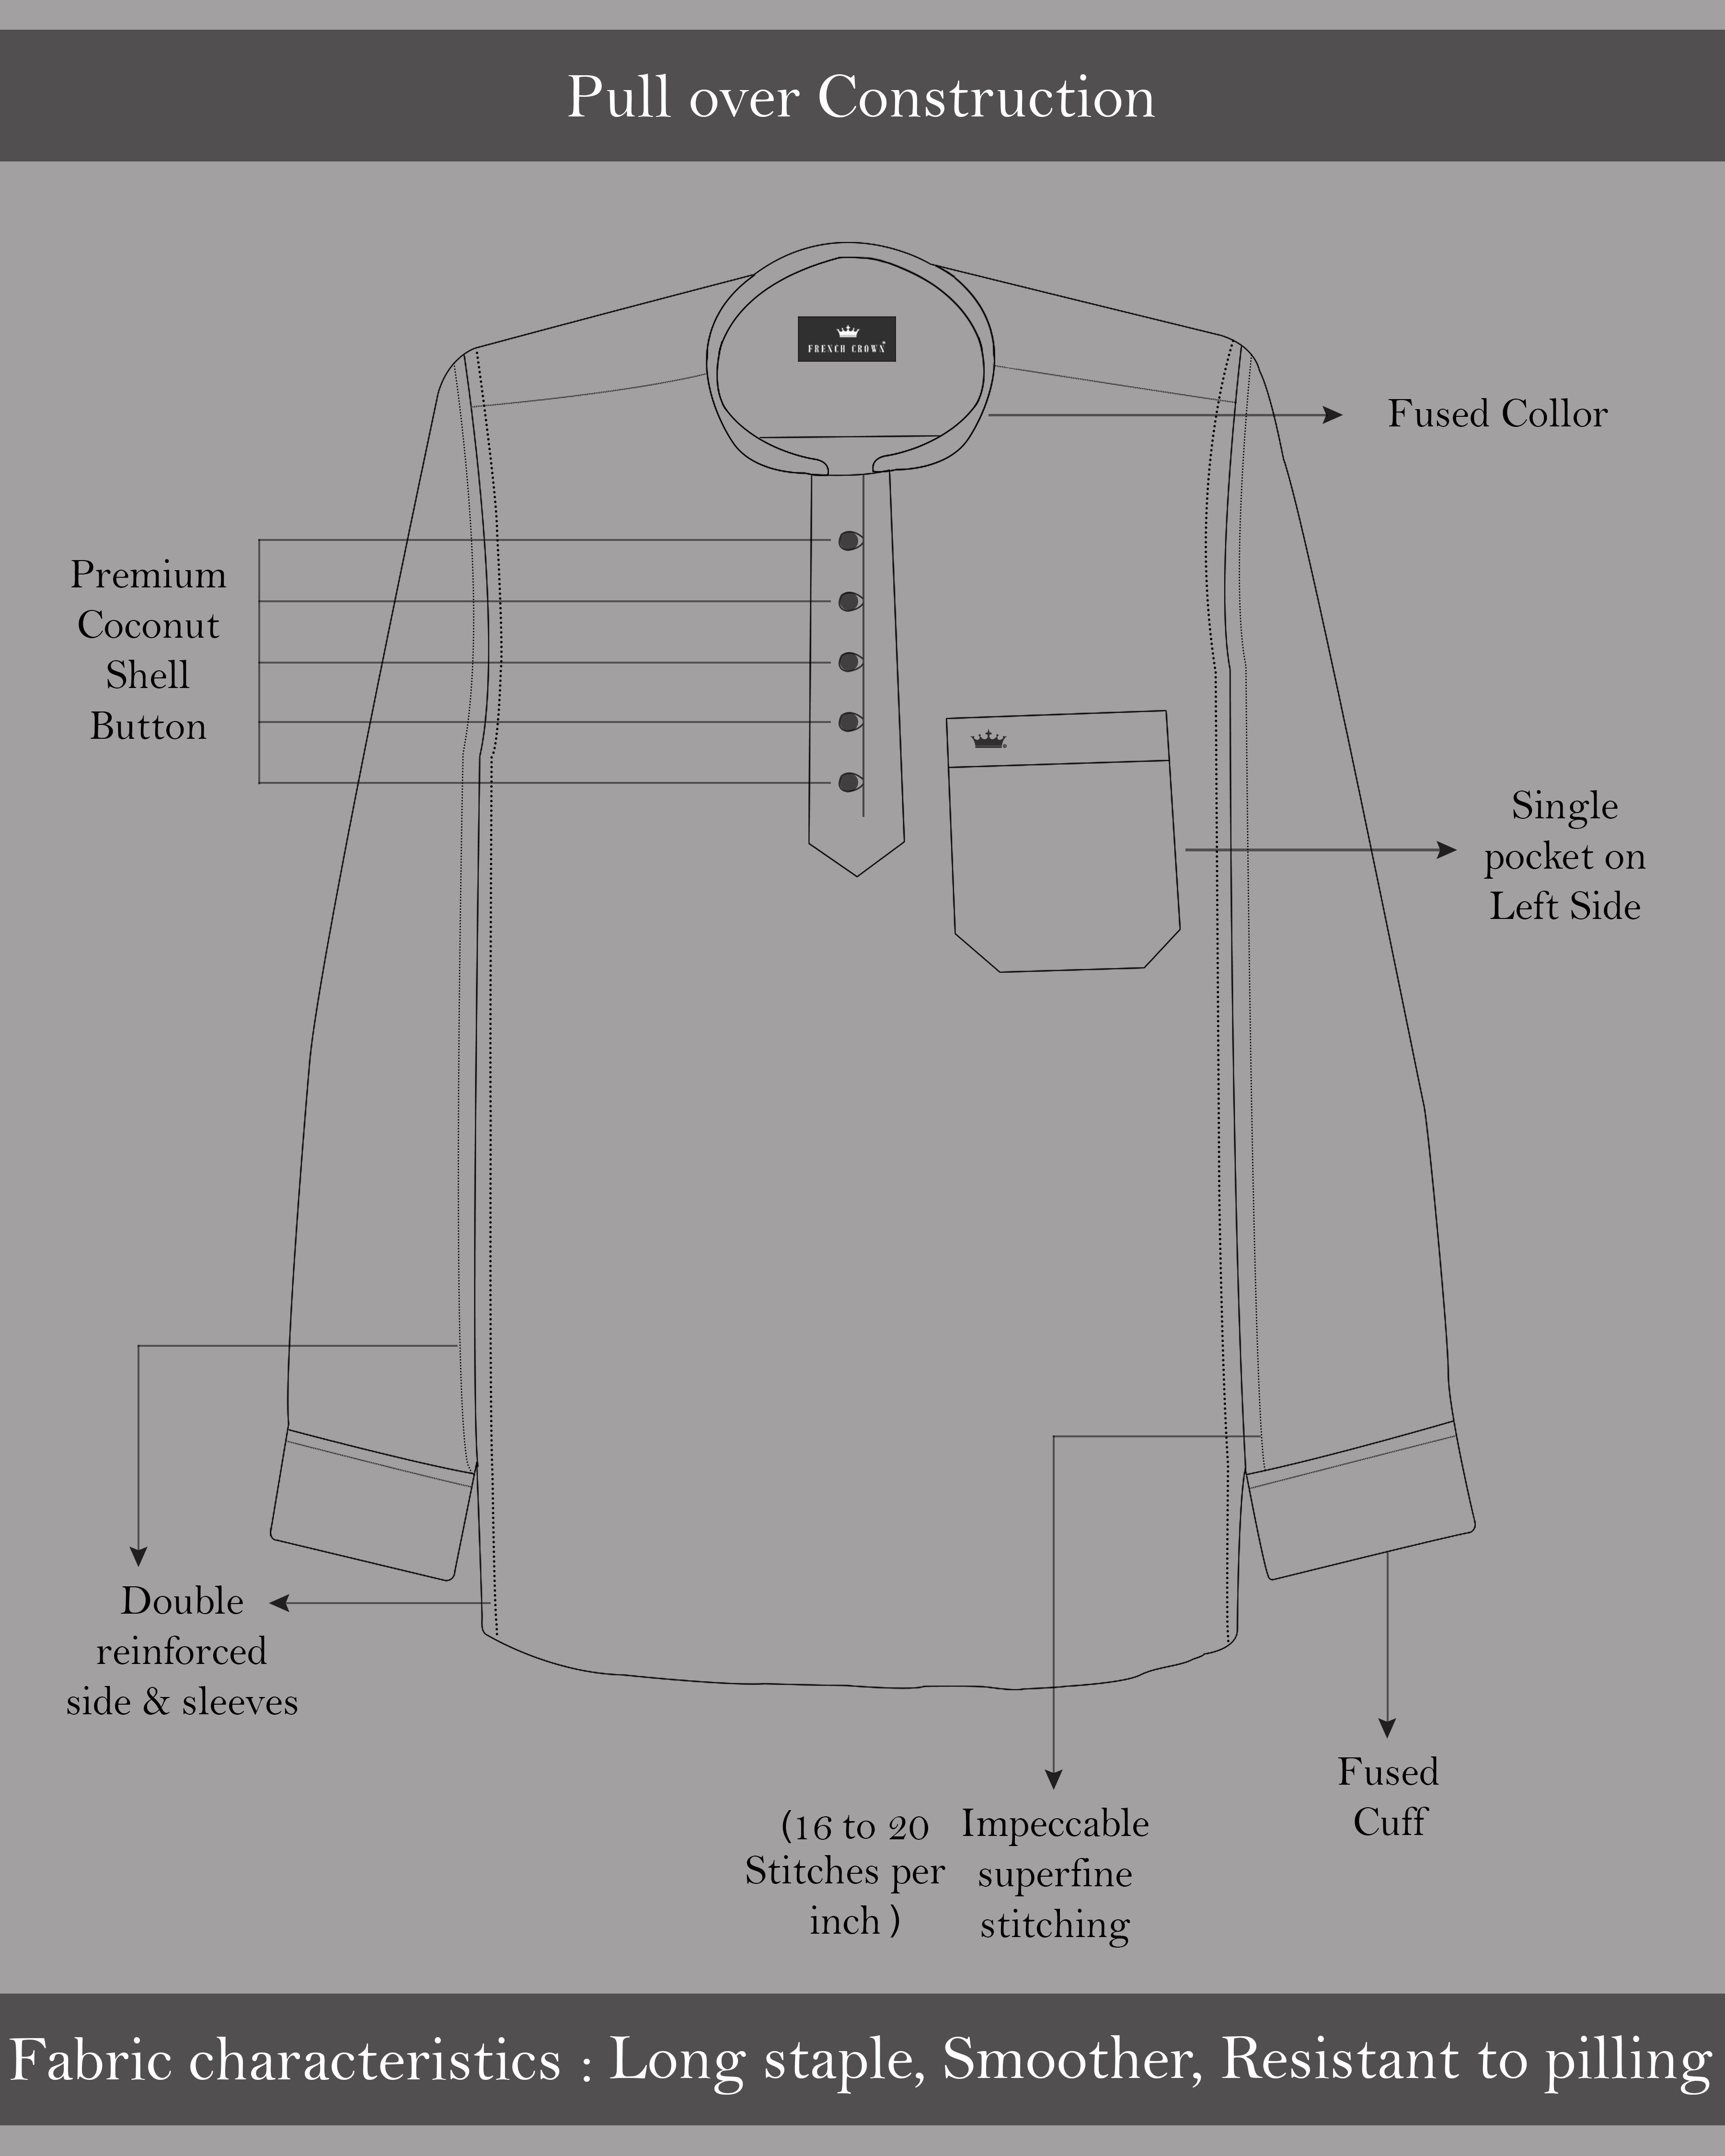 Mischka Grey Ancient Printed Premium Cotton Kurta Shirt